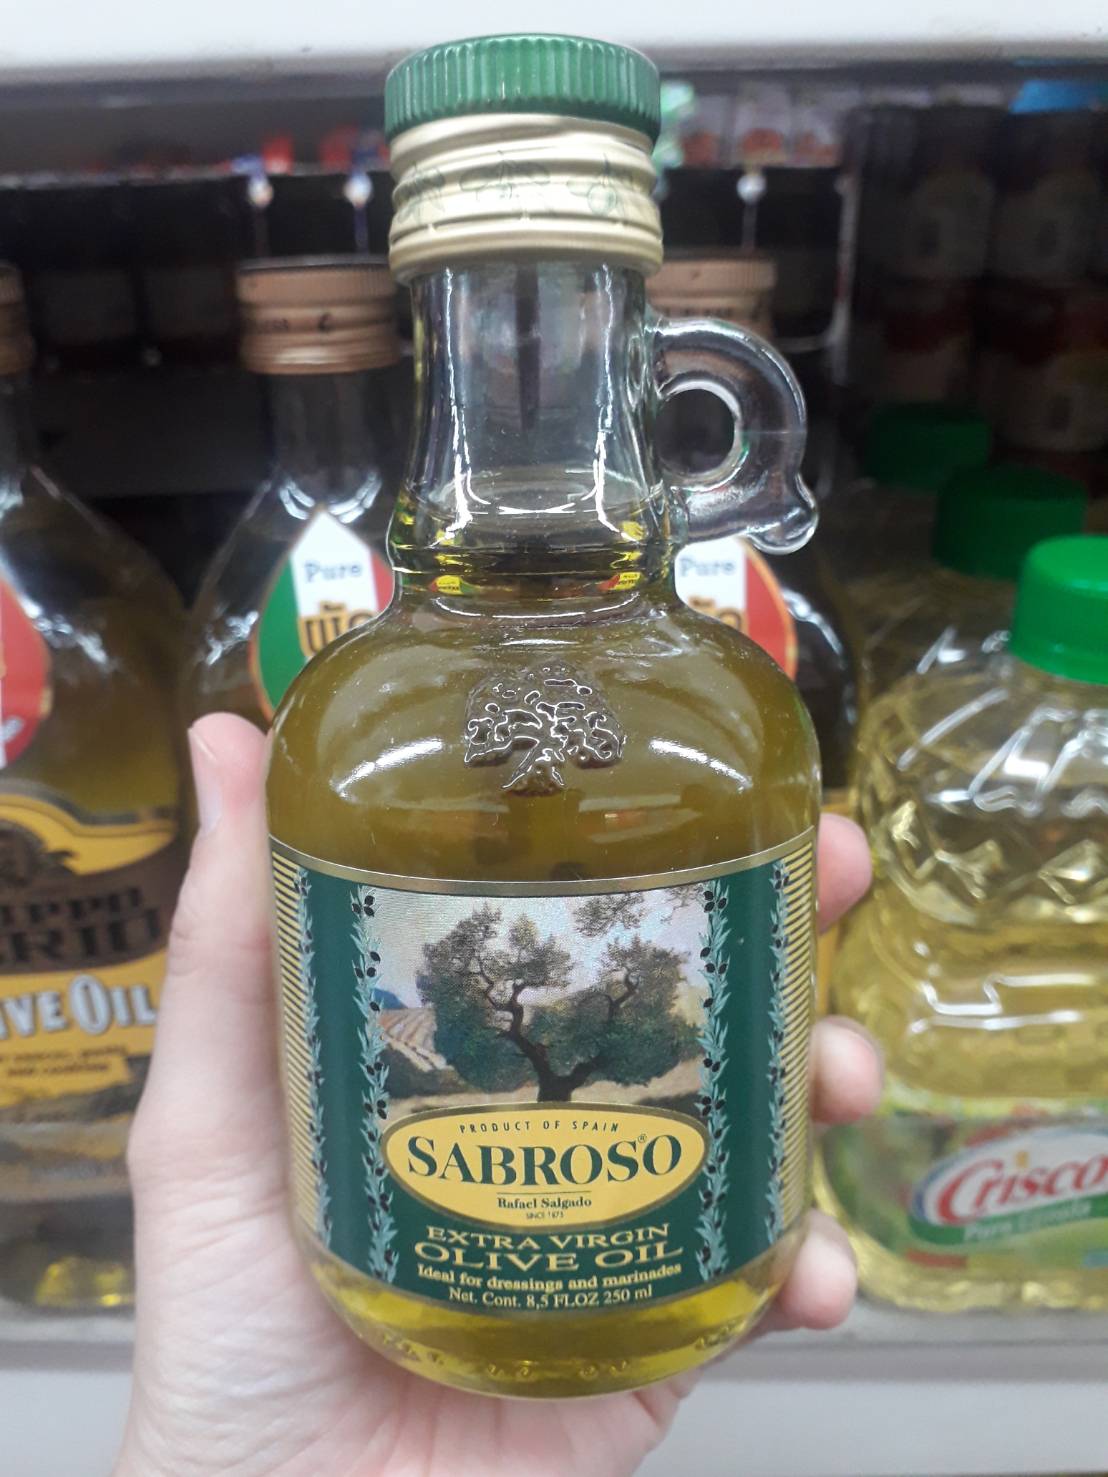 Sabroso Extra Virgin Olive Oil /ซาโบรโซ เอ็กซ์ตร้า เวอร์จิ้น โอลีฟ ออยล์ (น้ำมันมะกอกธรรมชาติไม่ผ่านกรรมวิธี 100%) ขนาด 250 มล.